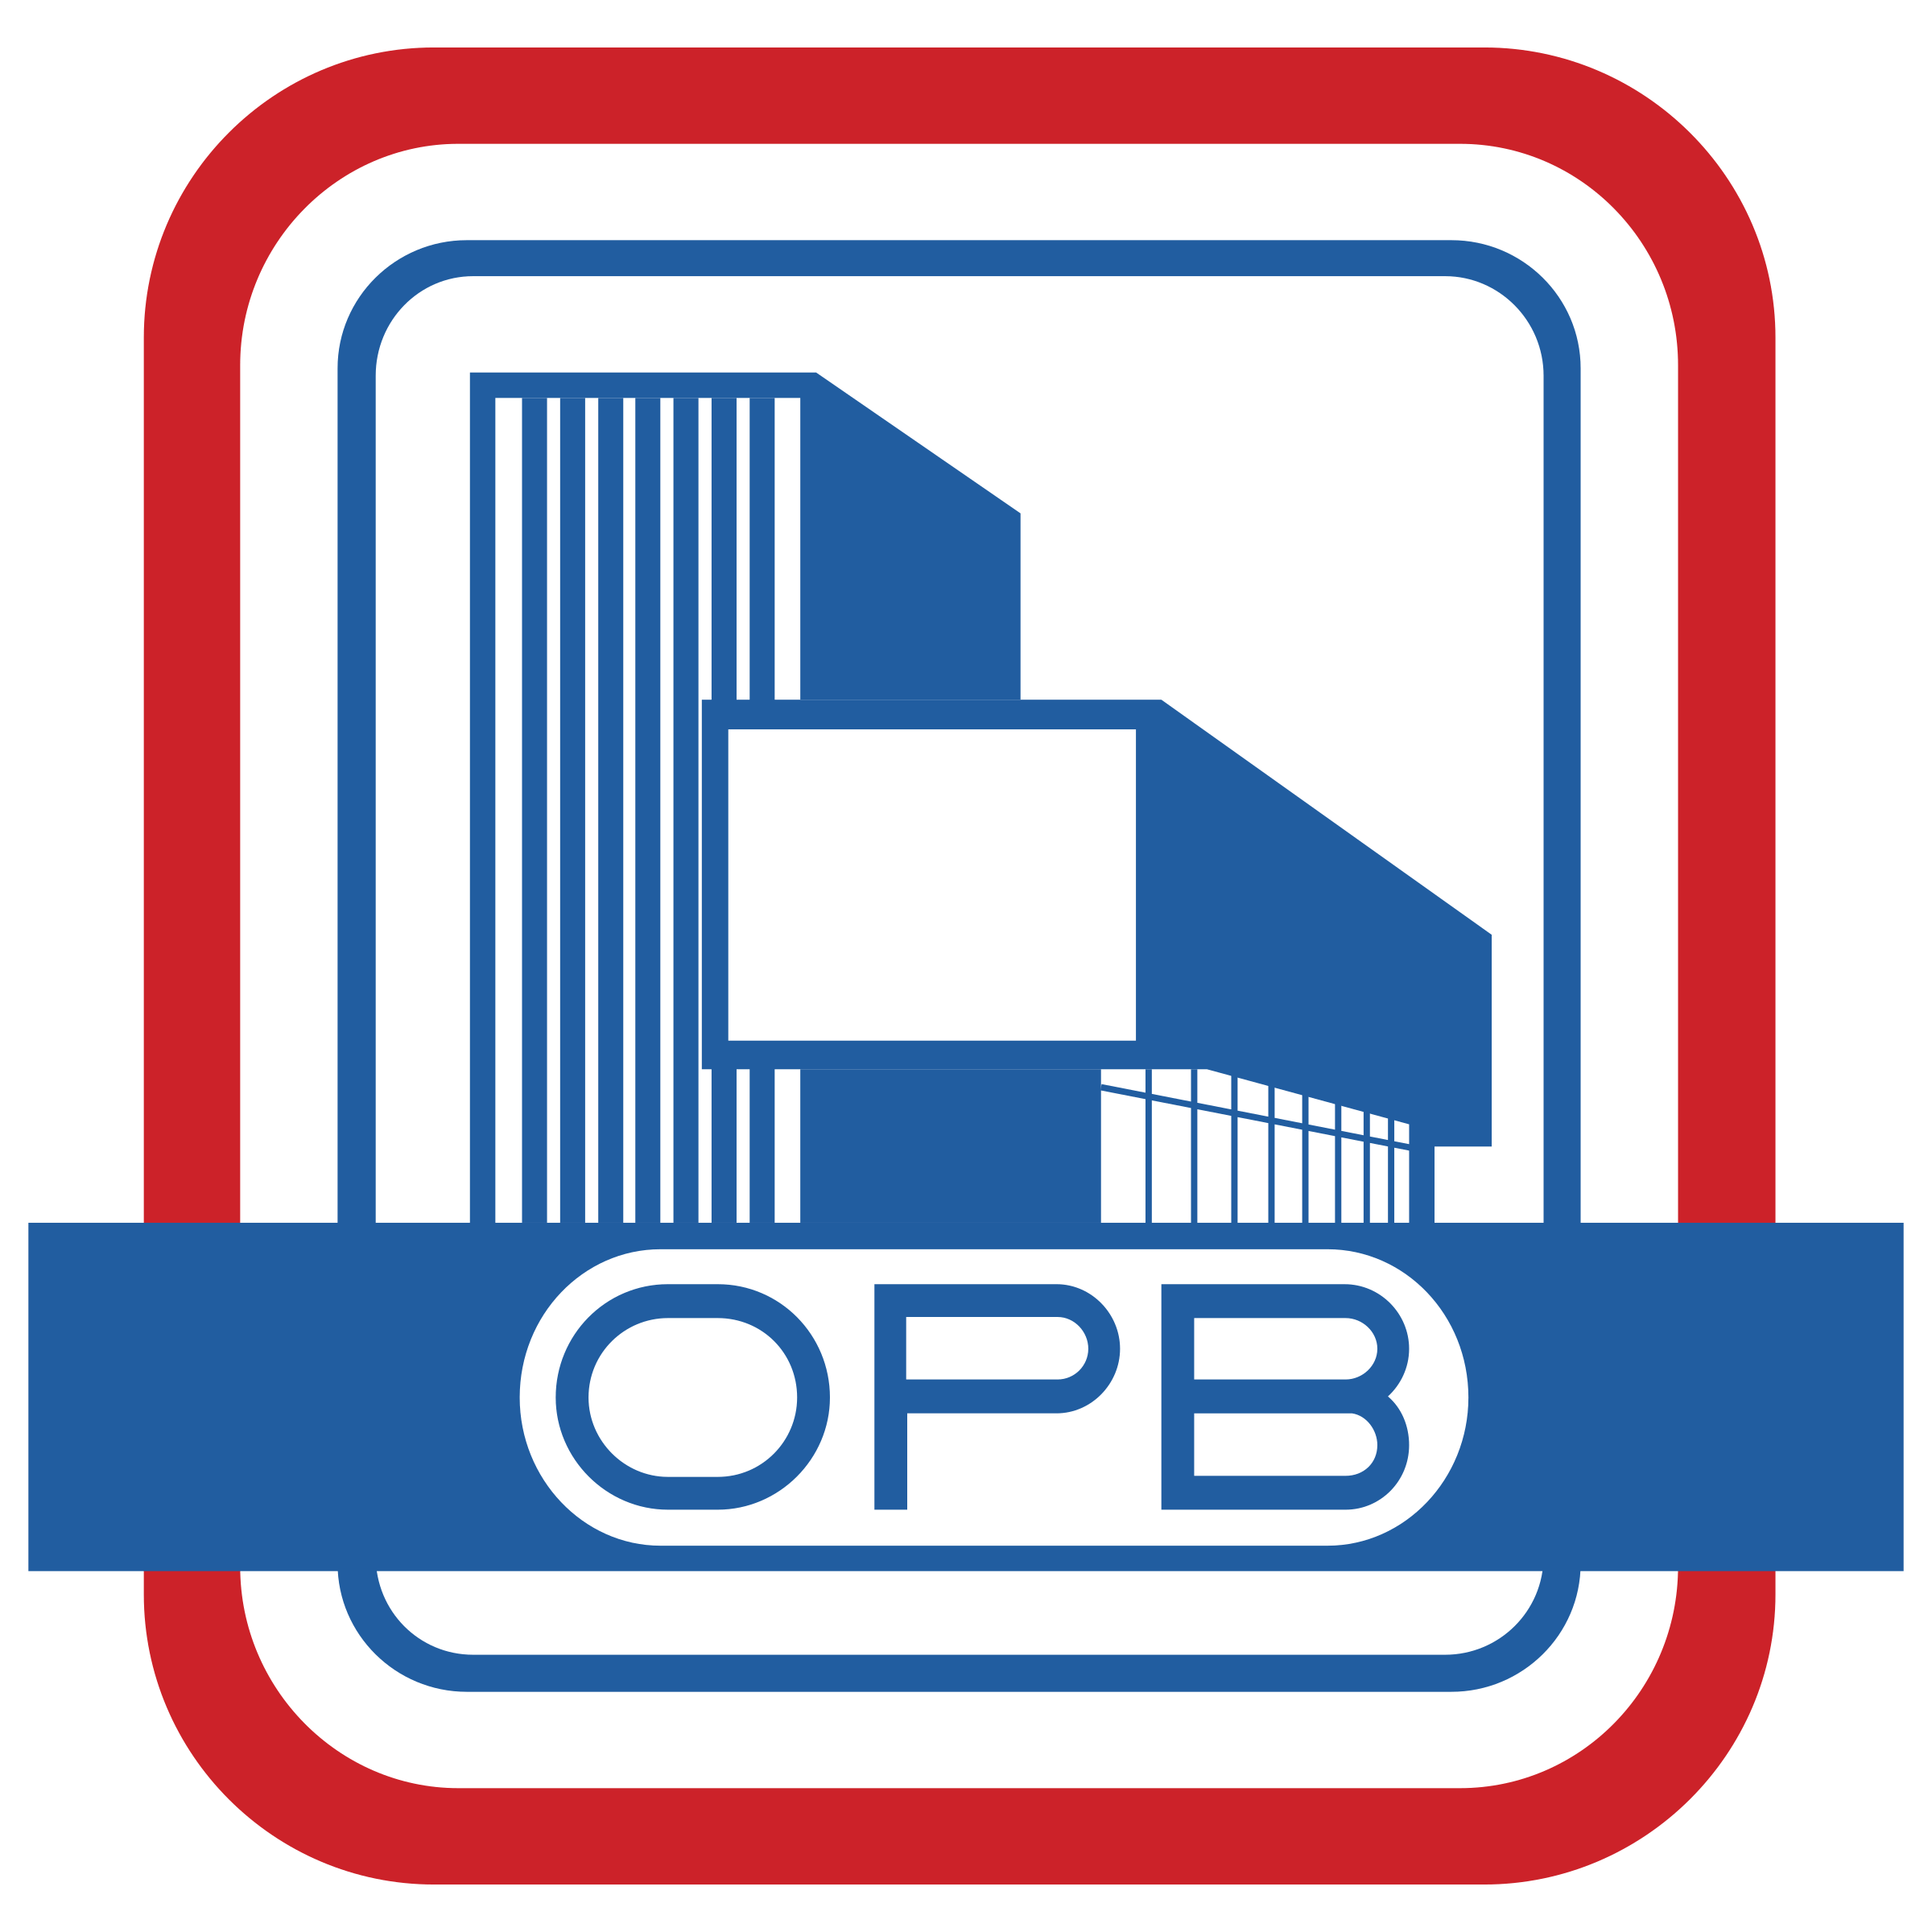 KOPB Logo - OPB Logo PNG Transparent & SVG Vector